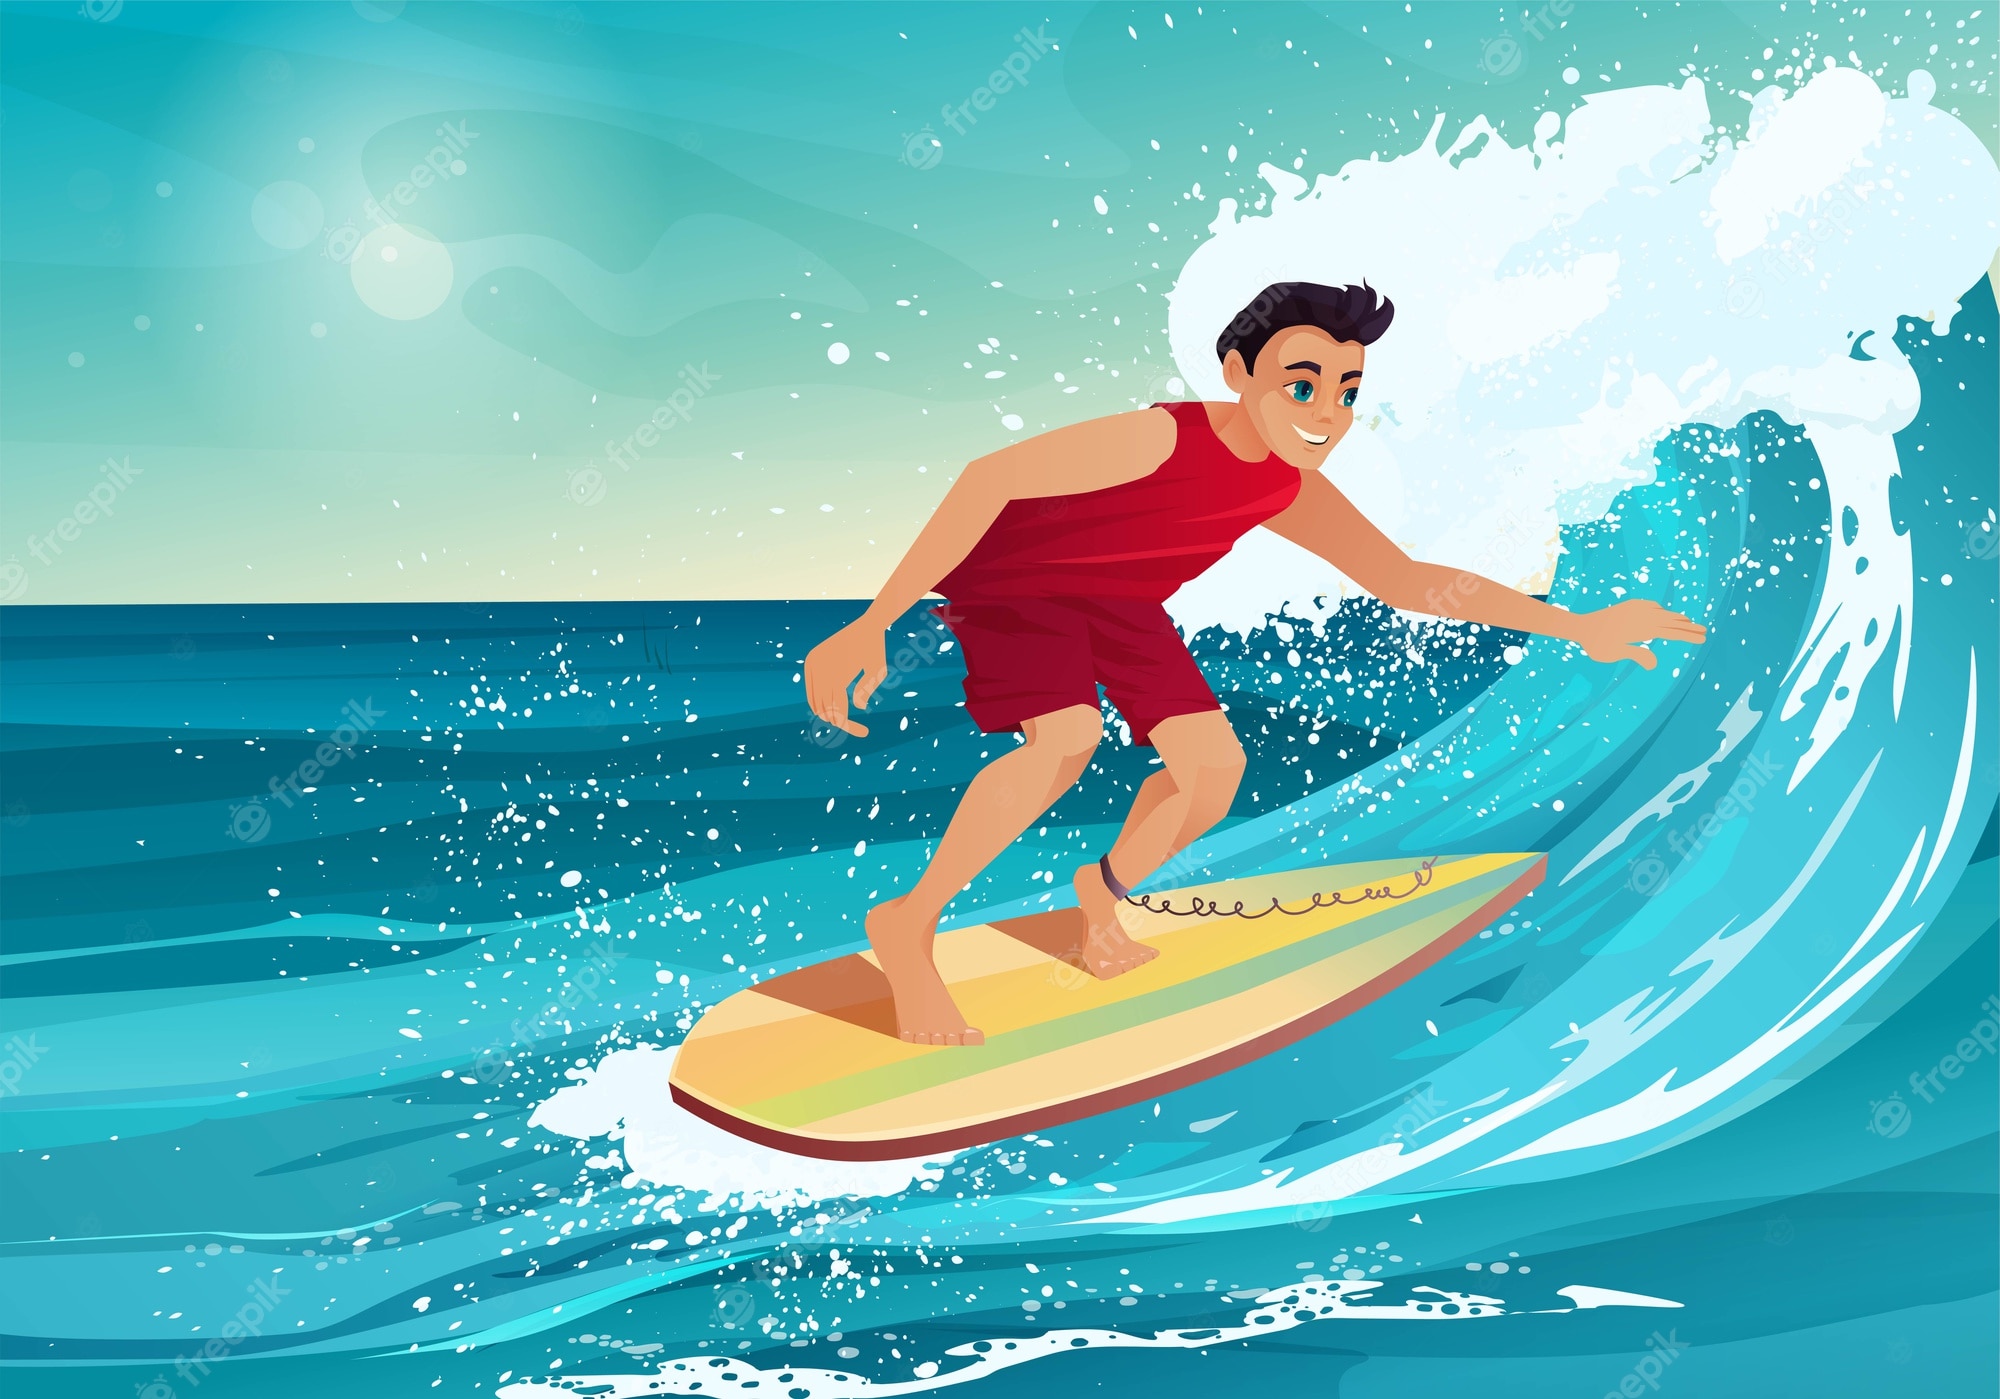 How to bodysurf | Kite surfing, Surfing, Bodysurfing - Clip Art Library